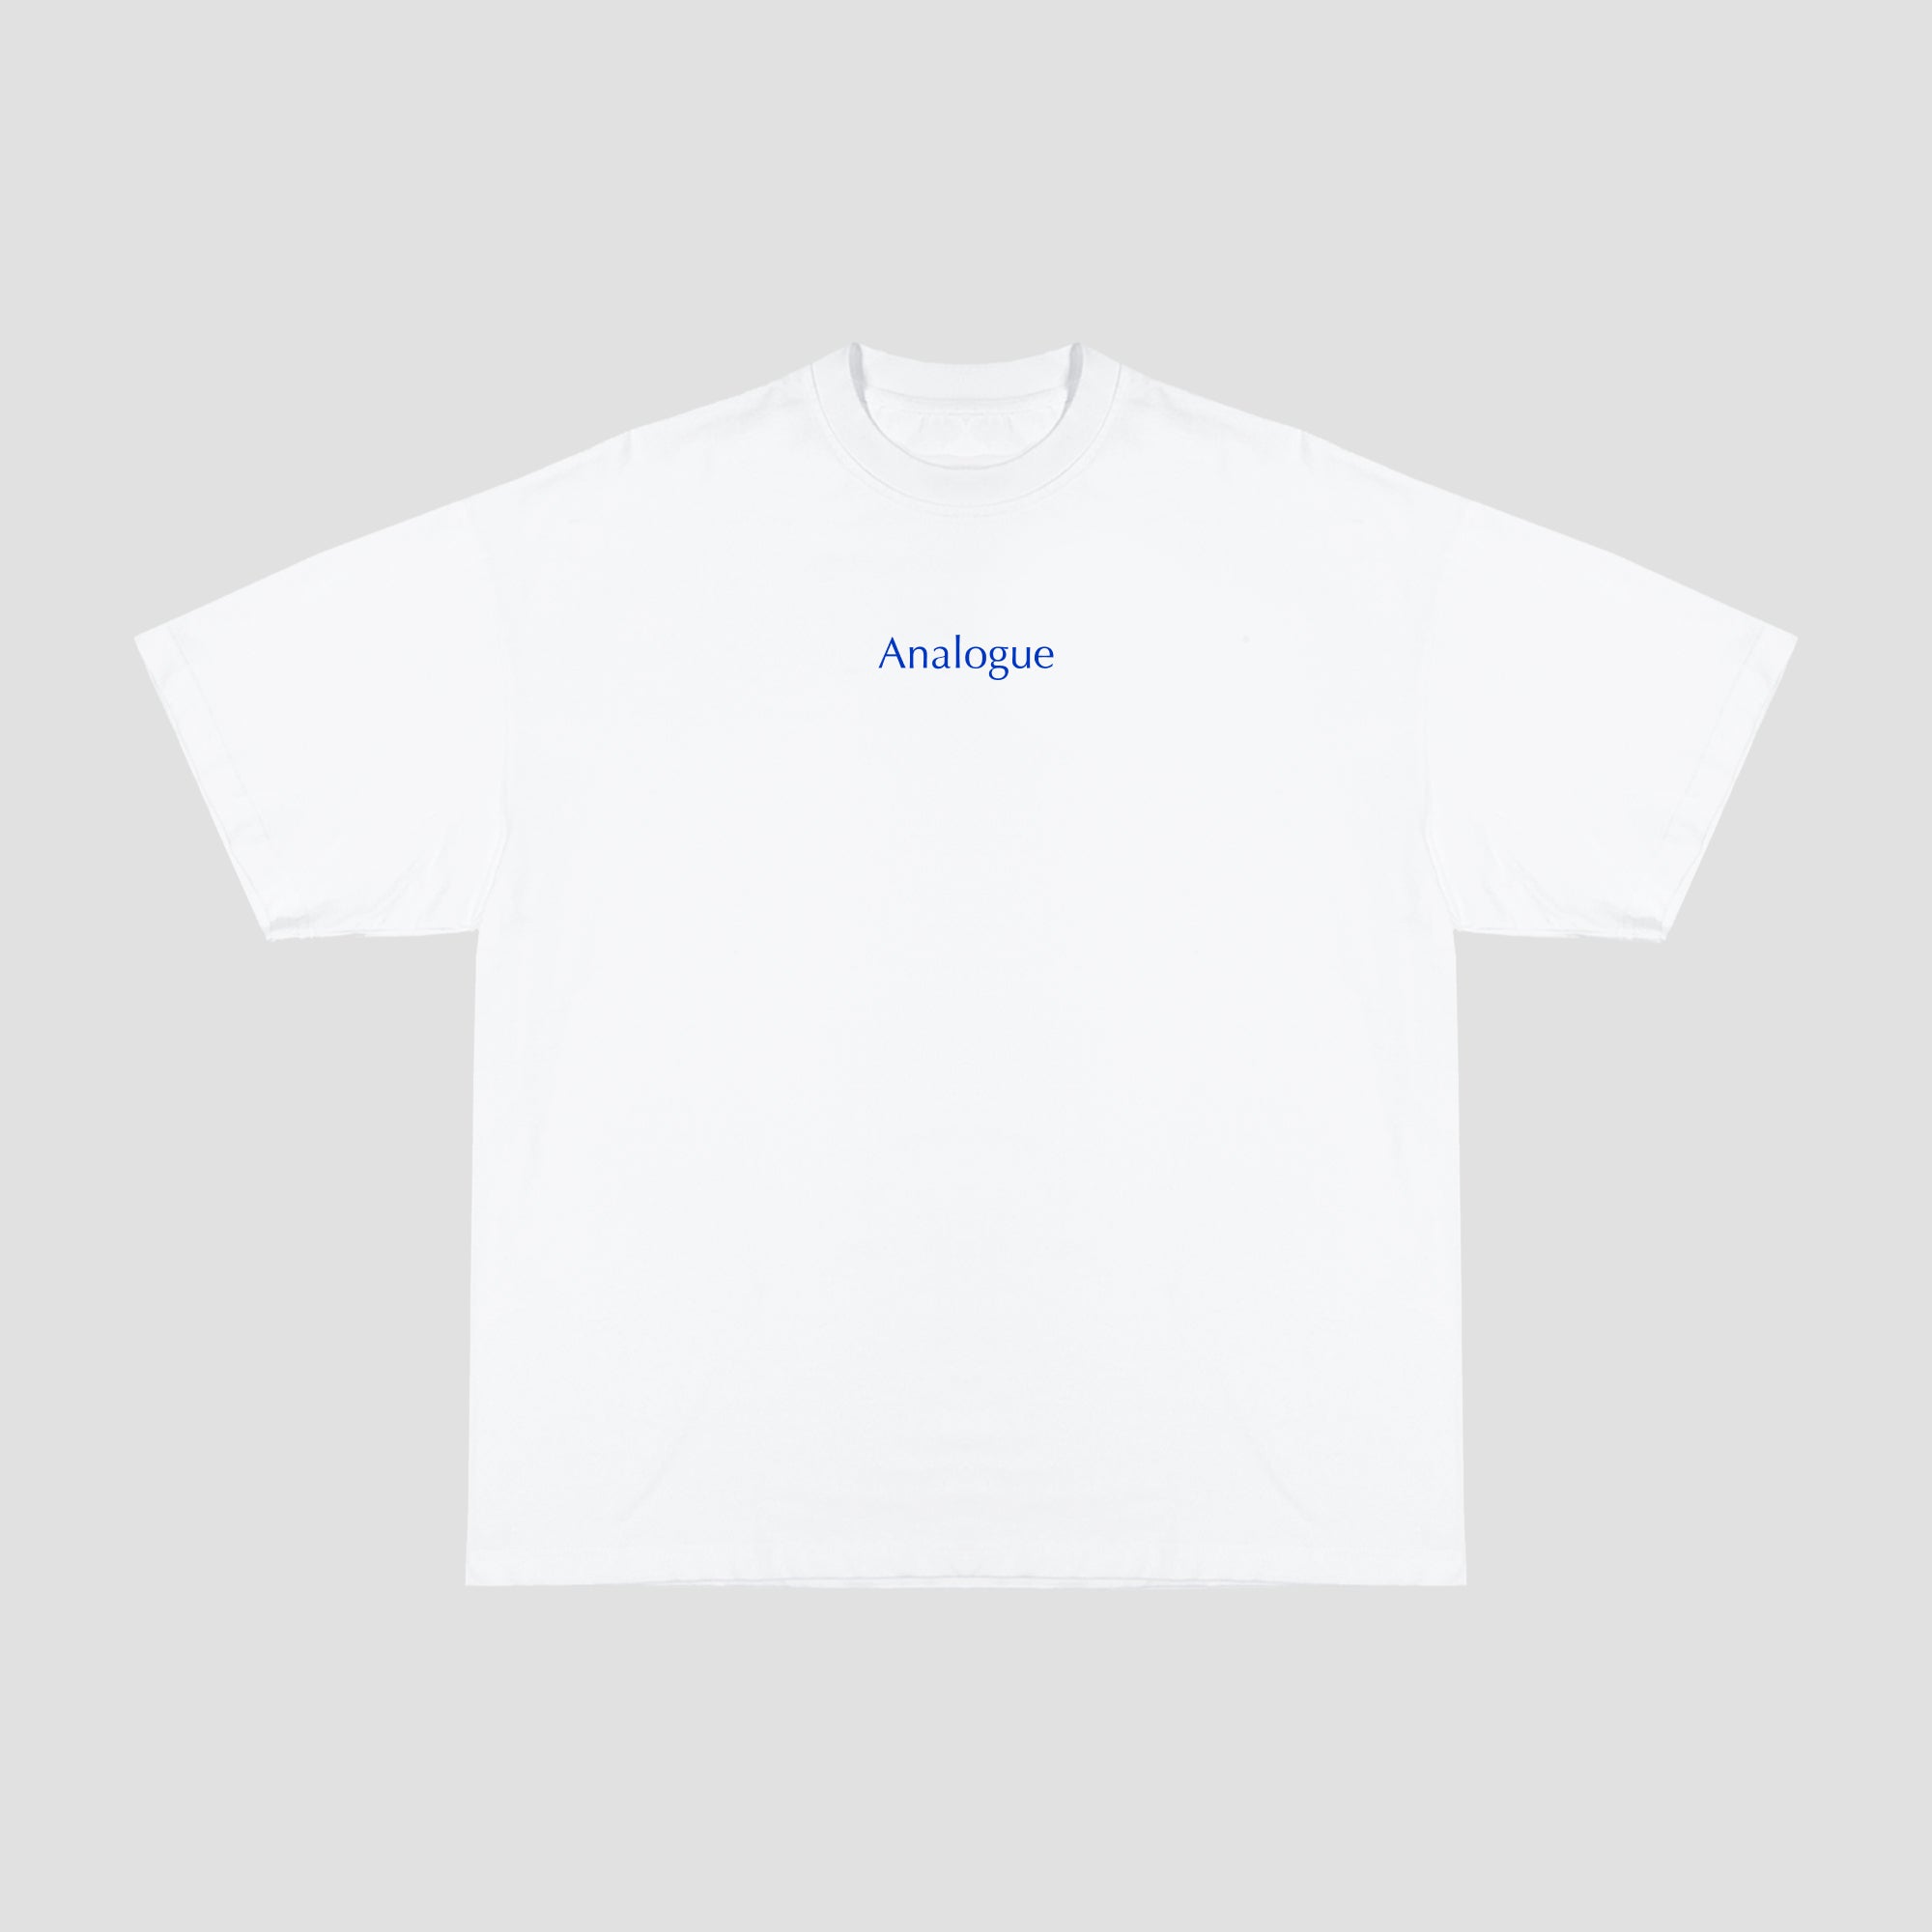 Analogue C41 T-shirt